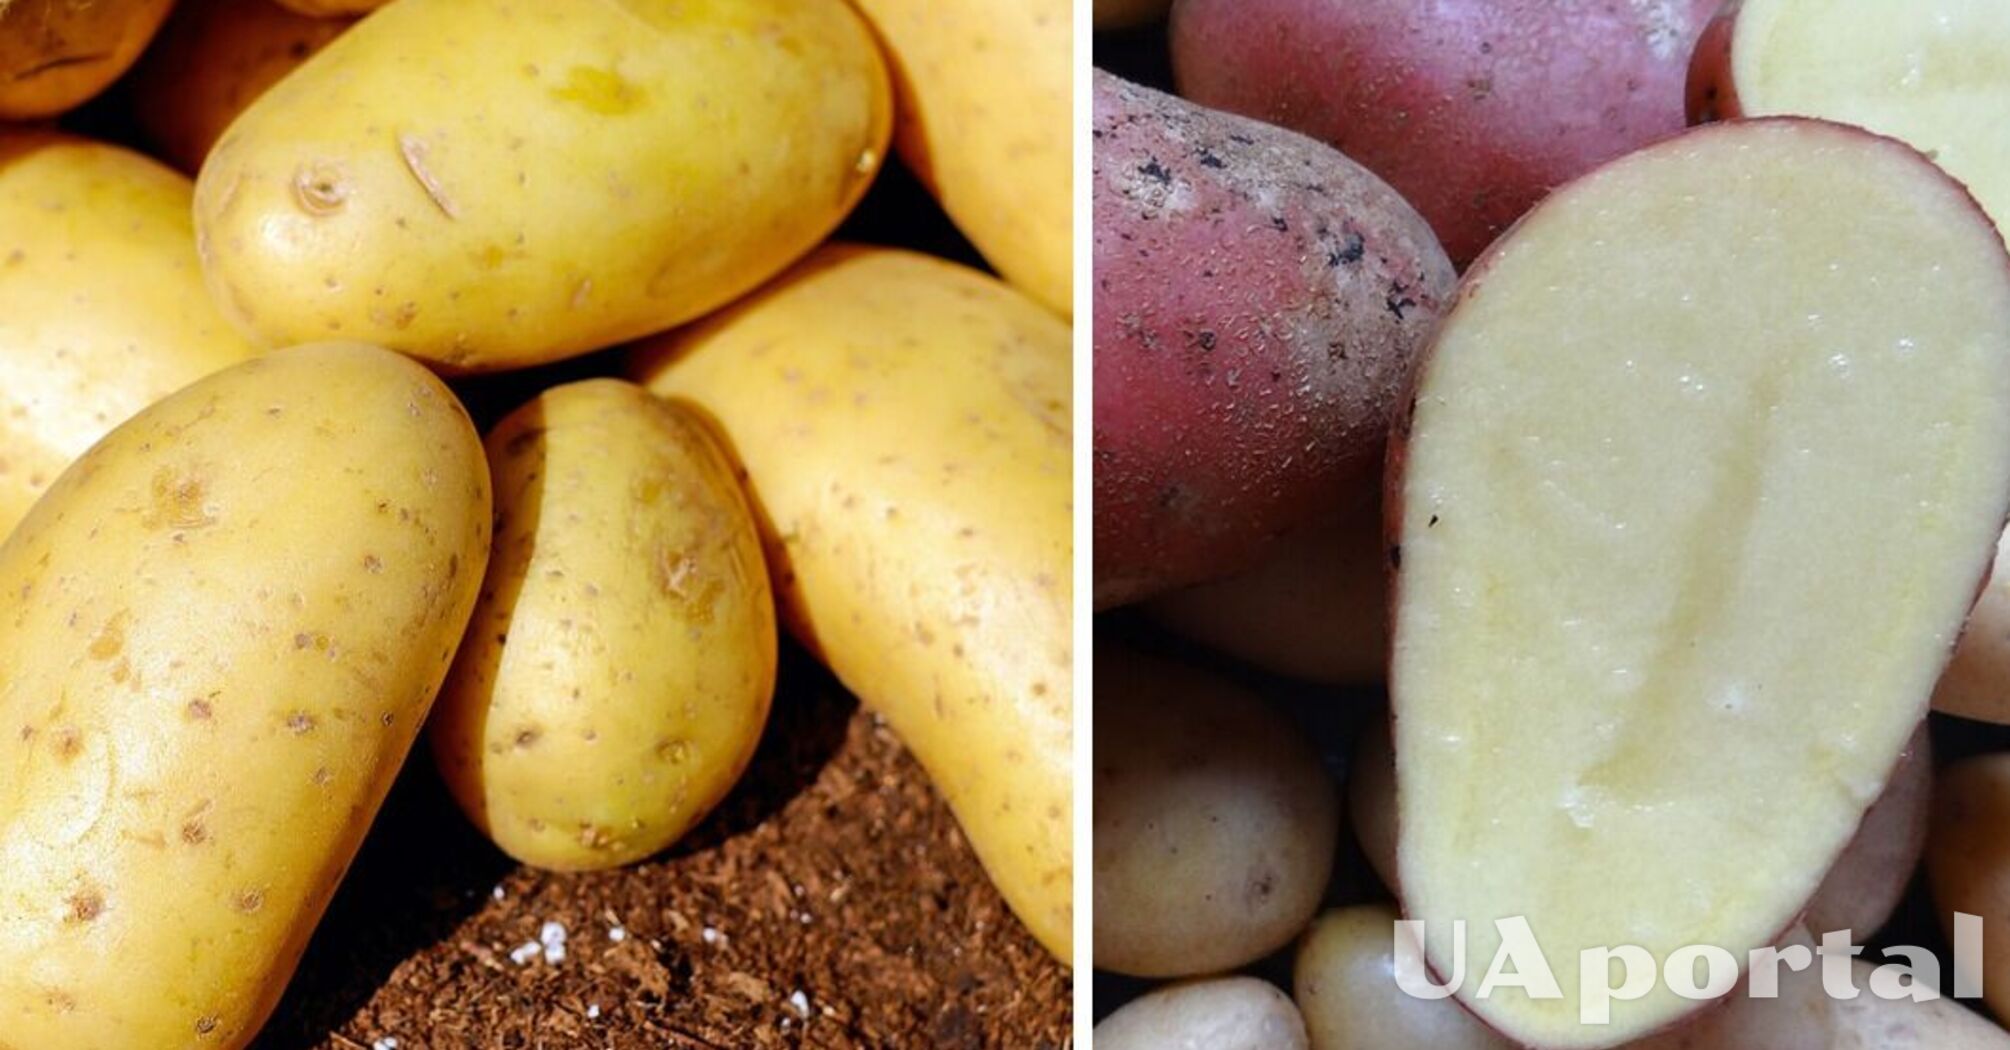 Experts explain how to store peeled potatoes without lemon juice